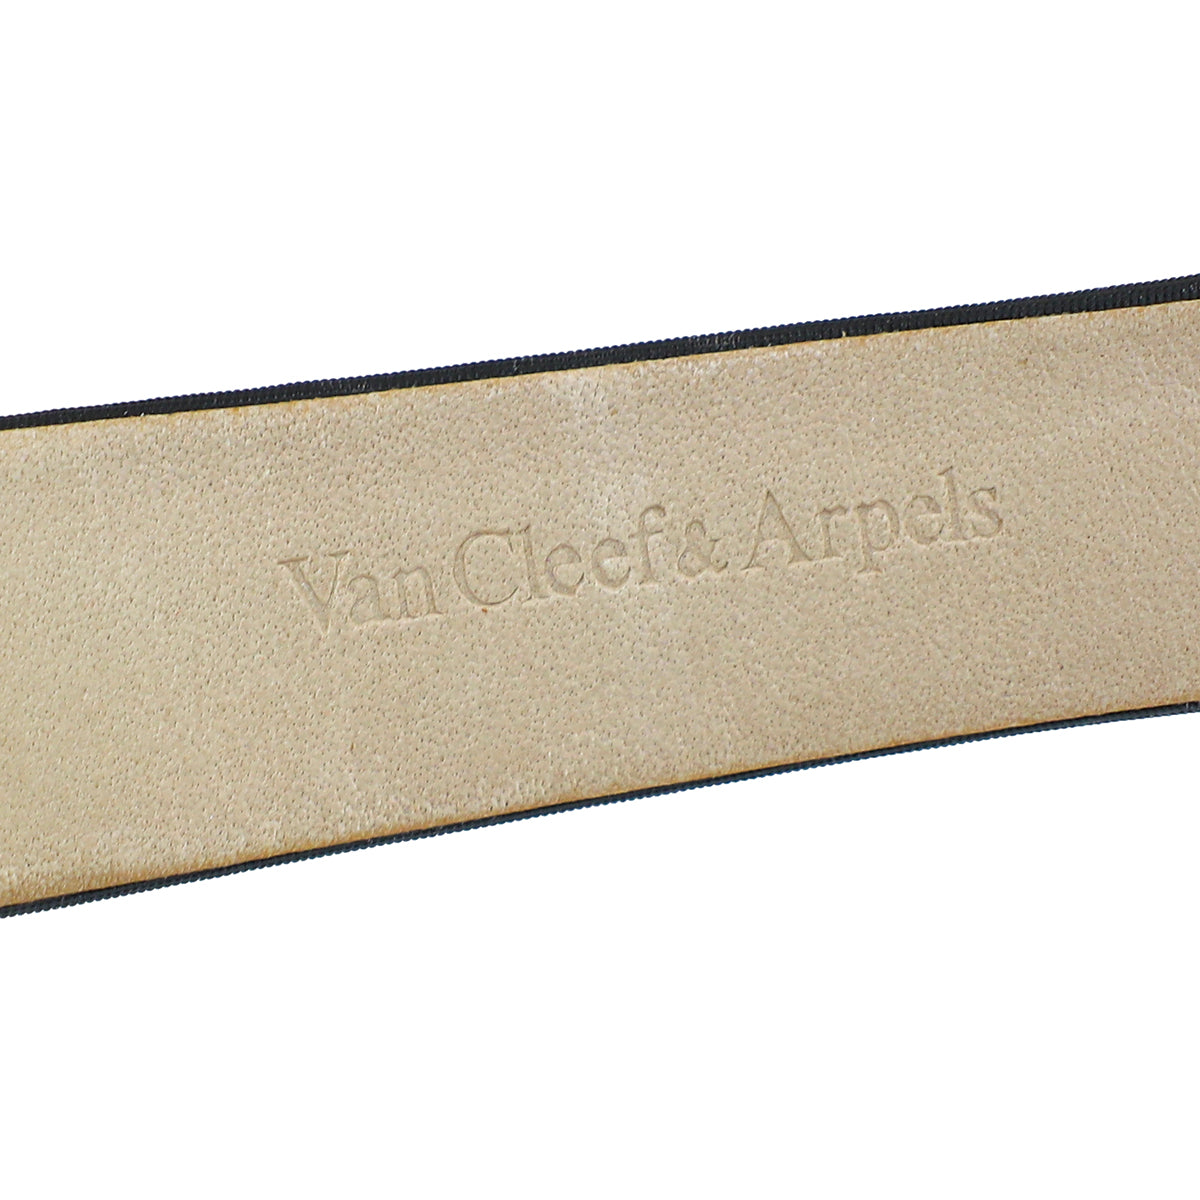 Van Cleef & Arpels 18K White Gold Charms with Diamonds 32mm Quartz Watch